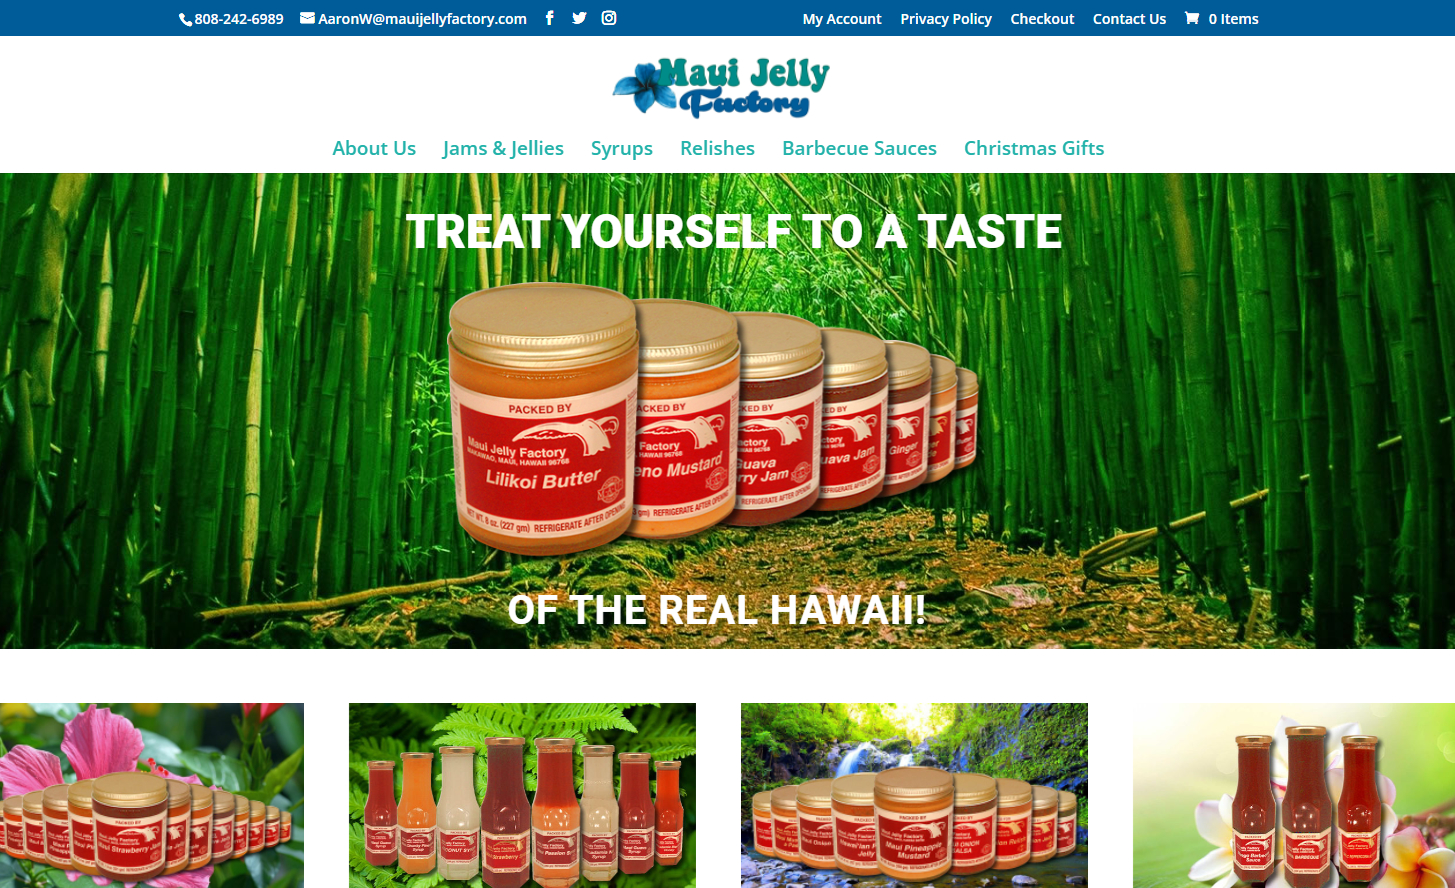 Maui Jelly Factory website, created by Maui Web Designs